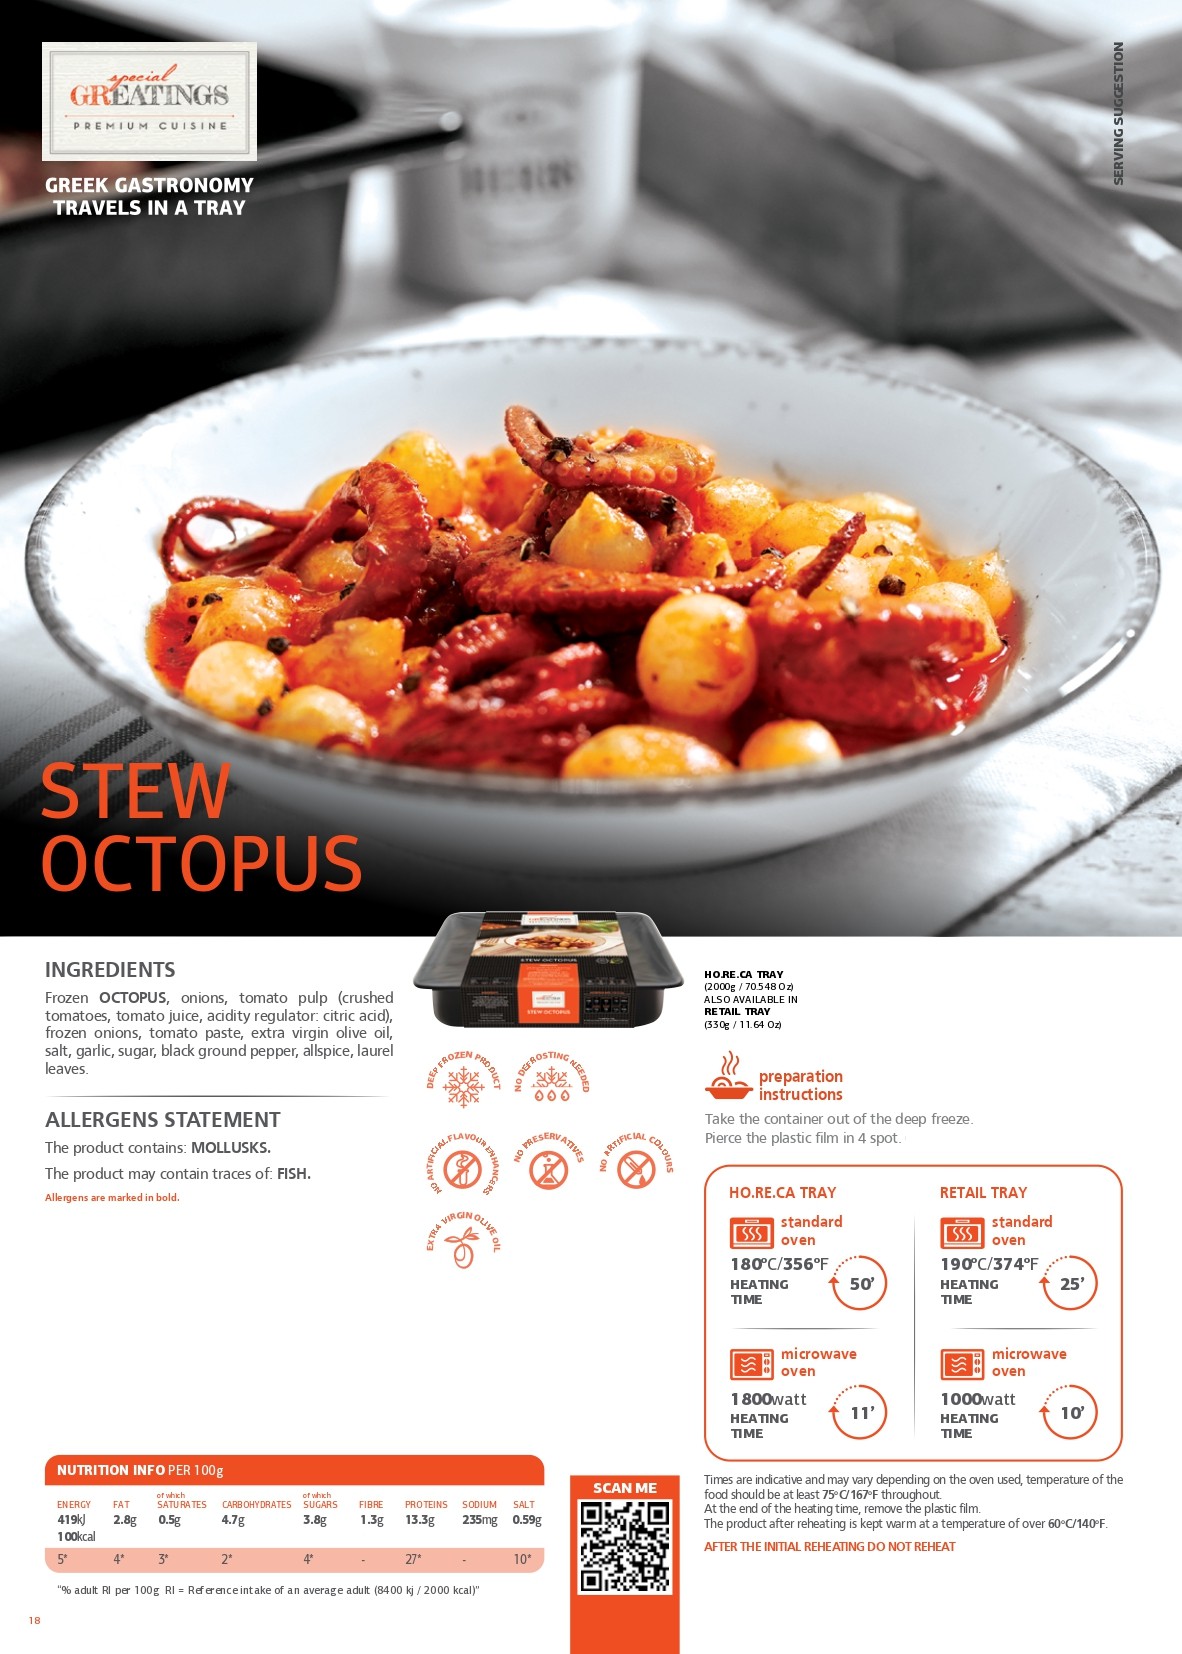 Stew octopus pdf image